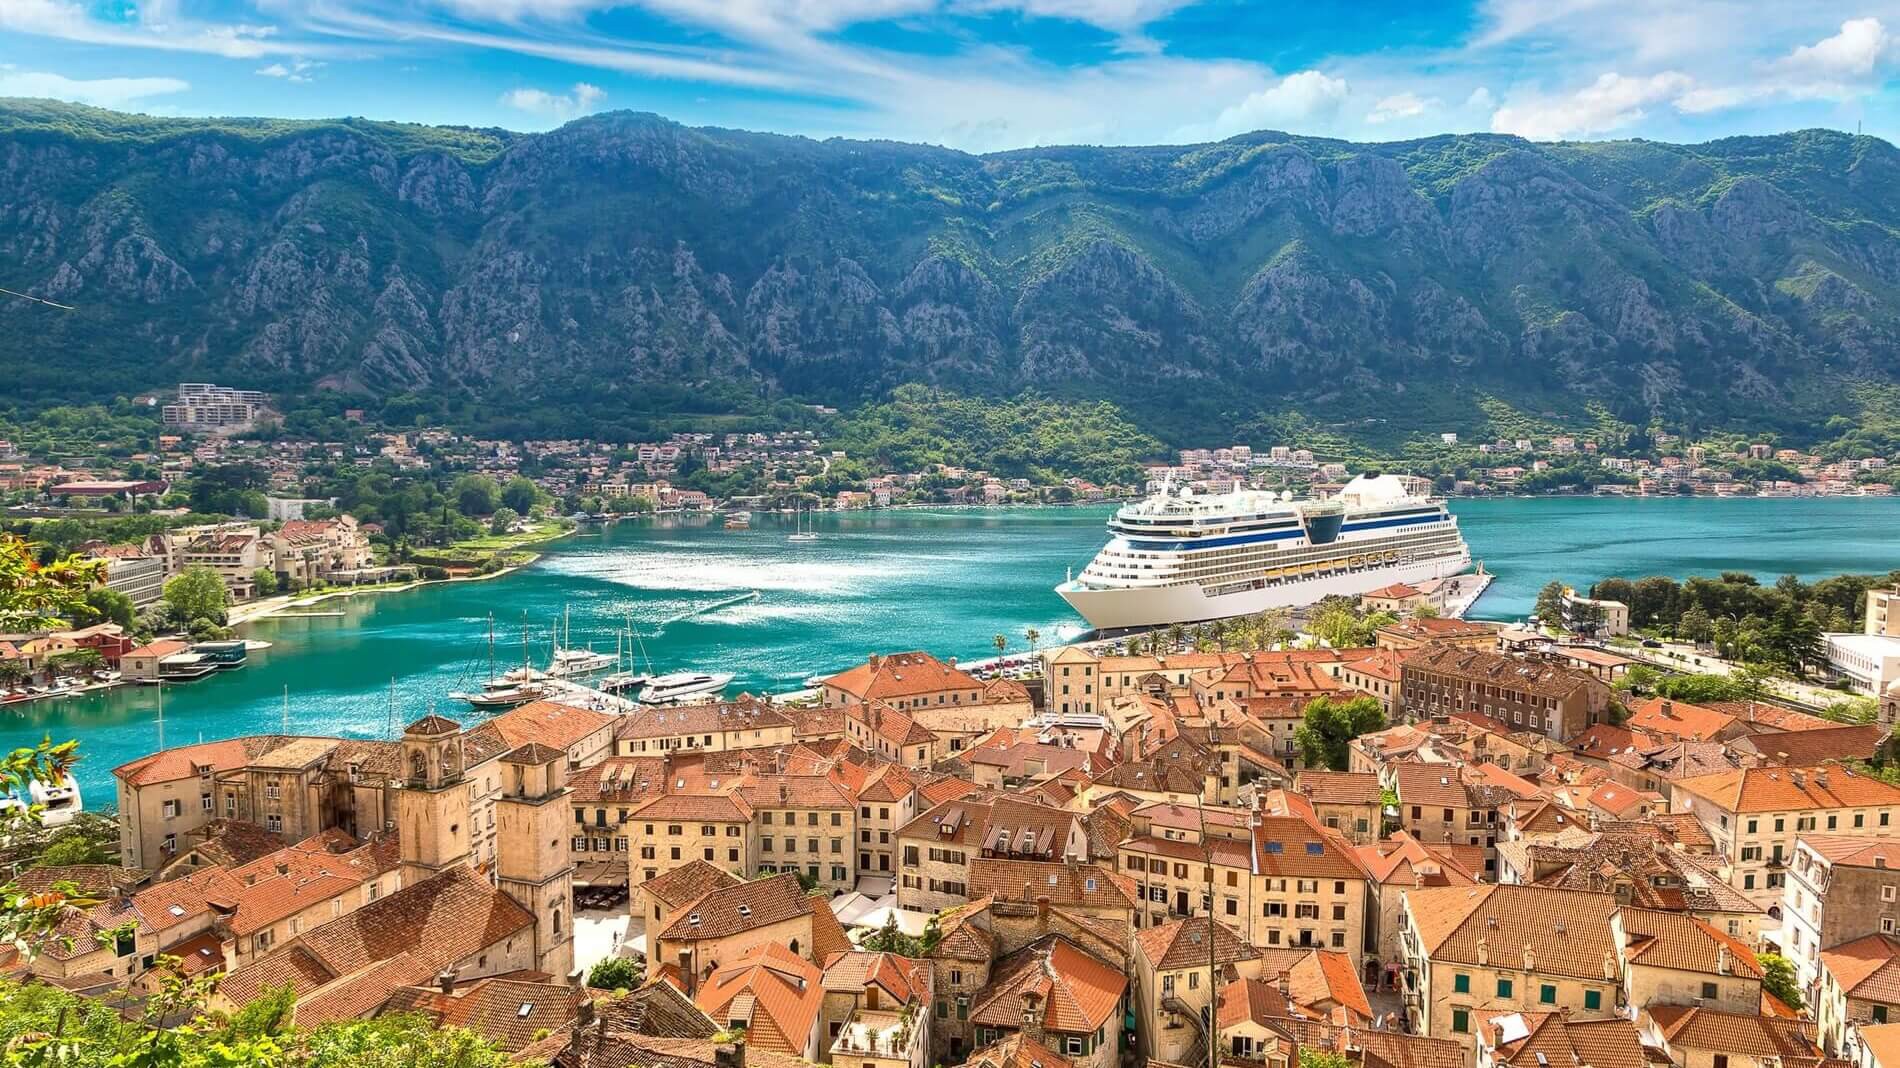 Kotor - Adriatic Sea | Croatia Cruise Croatia Cruise